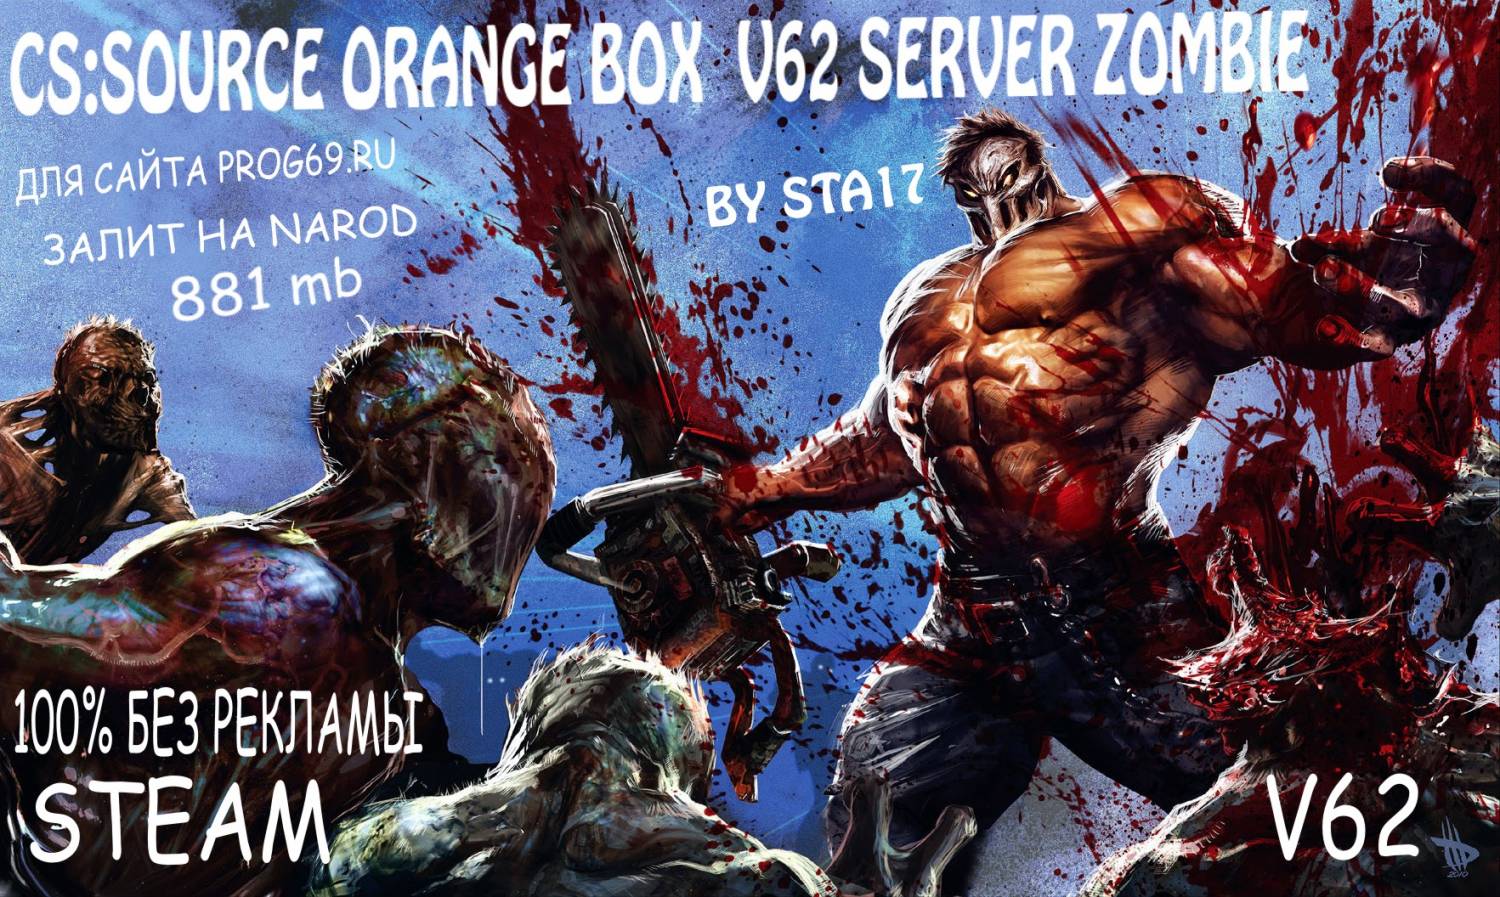 Скачать NEW !!! cs:source orange box V62 SERCER STEAM ZOMBIE бесплатно